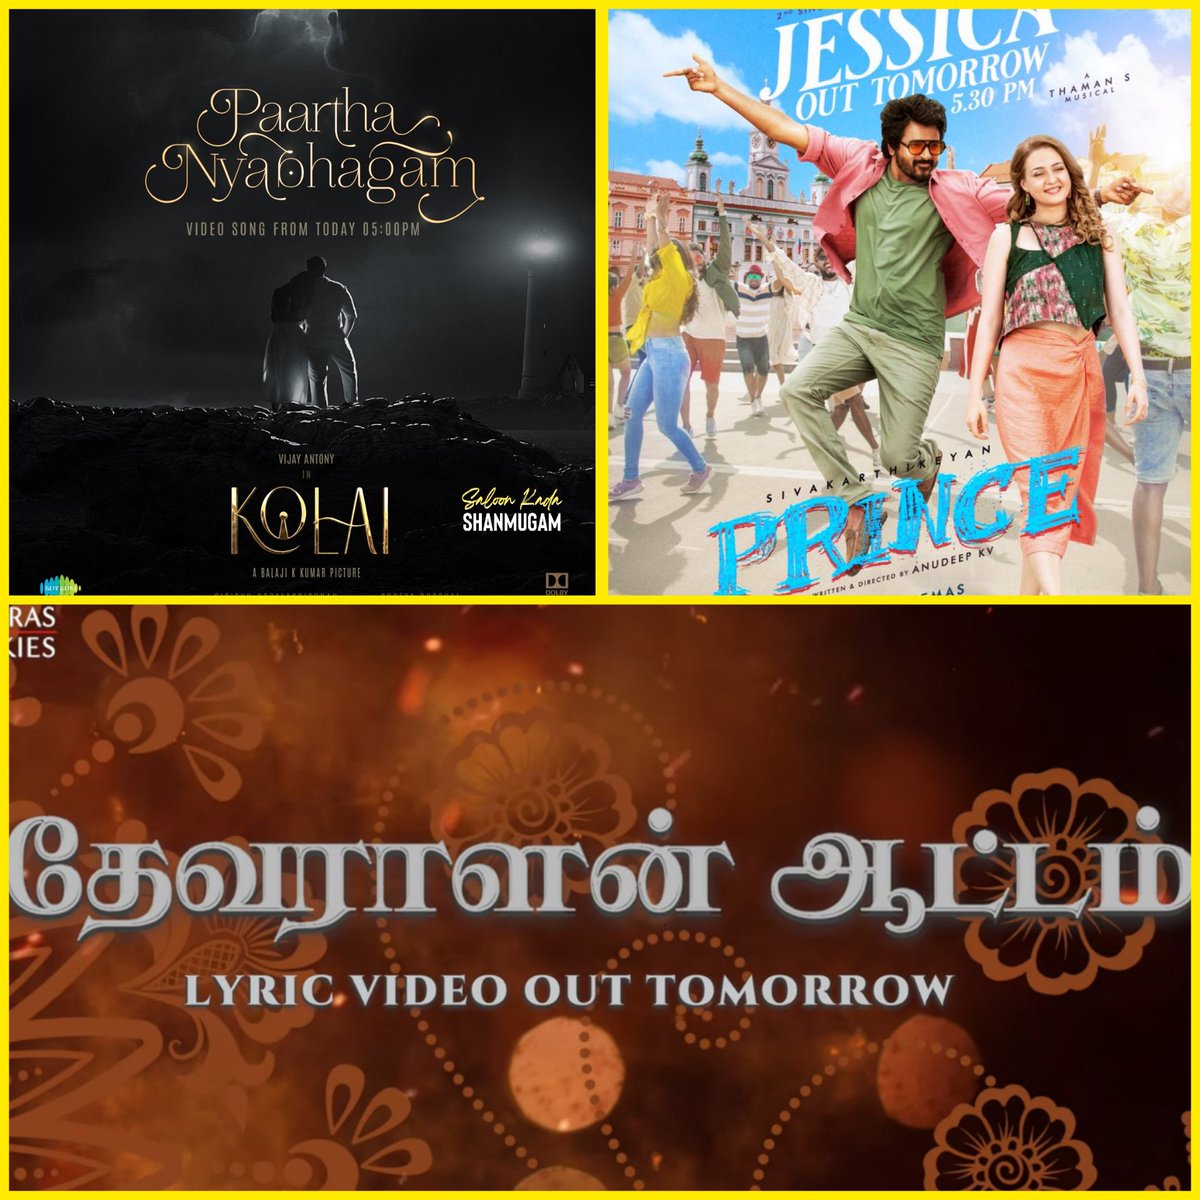 Updates Coming Up Today Evening⭐

#Kolai Single #PaarthaNyabhagam - 5PM
#VijayAntony | #Girishh | #BalajiKumar

#Prince Single #Jessica - 5.30PM
#Sivakarthikeyan | #Thaman | #AnudeepKV

#PS1 Single #DevaralanAattam
#Karthi | #ARRahman | #ManiRatnam